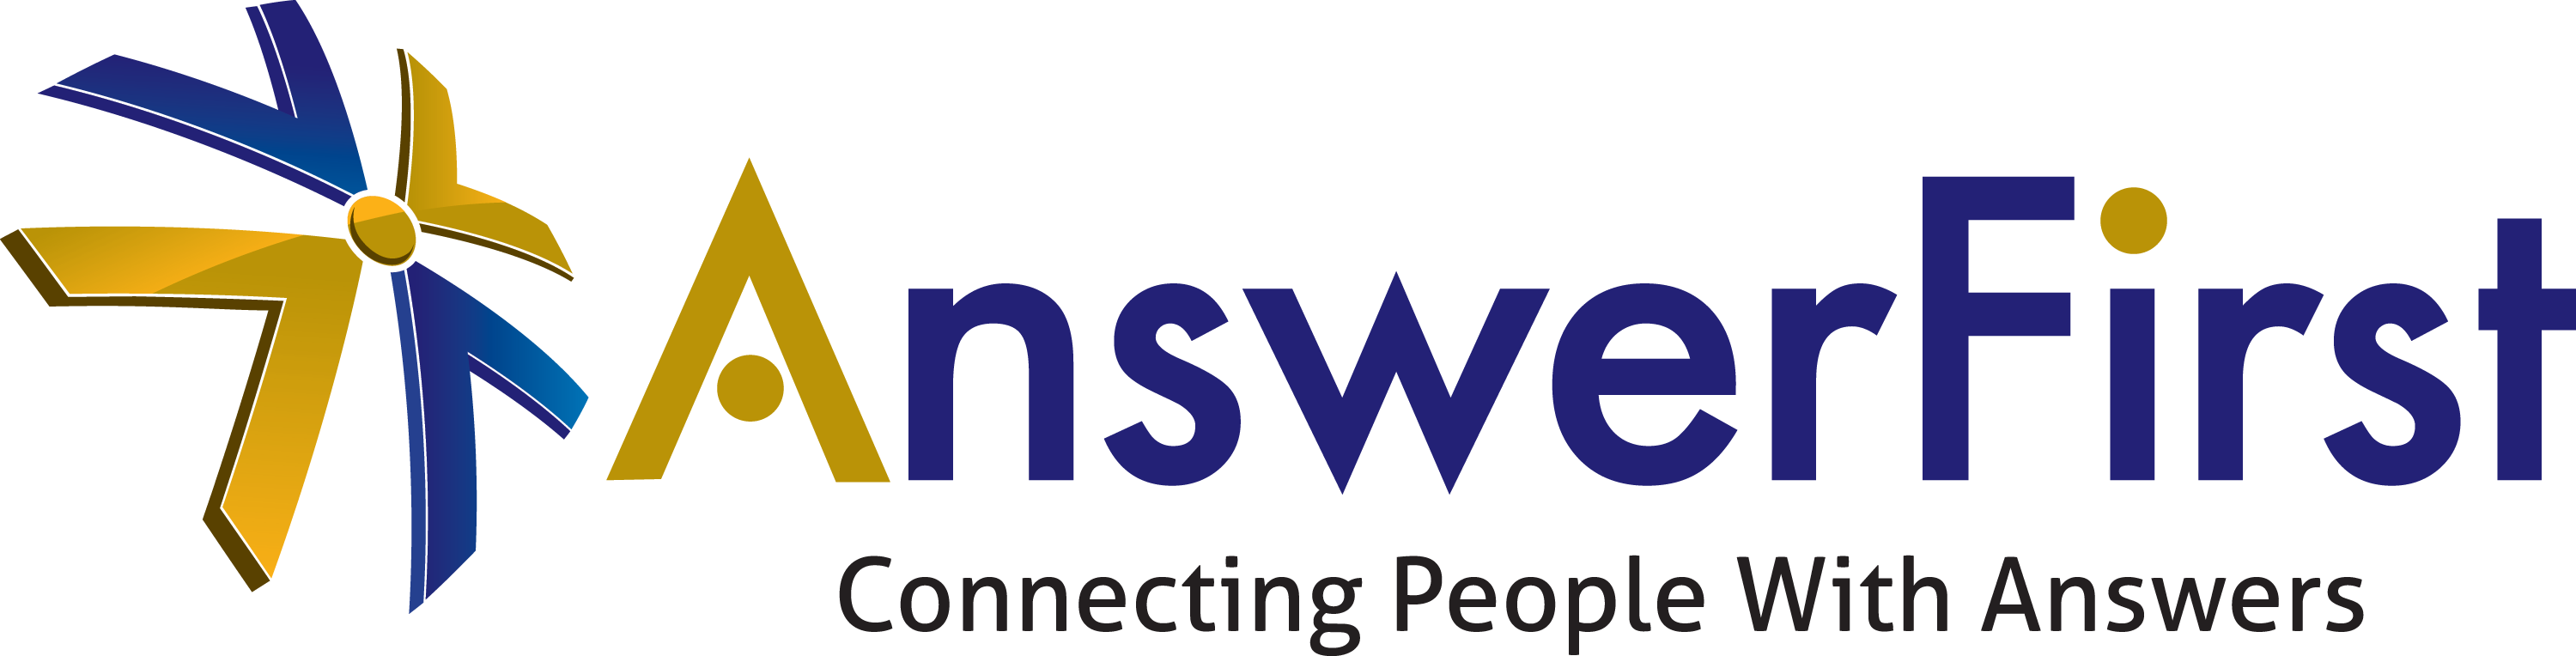 AnswerFirst Communications, Inc. logo